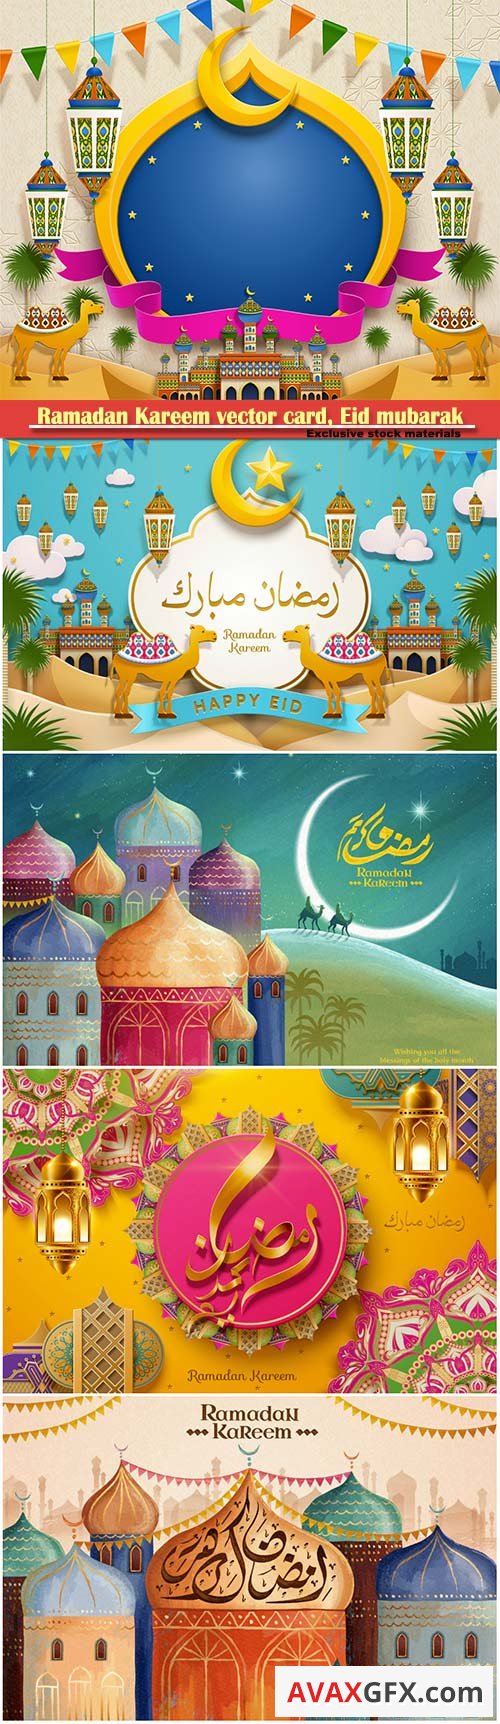 Ramadan Kareem vector card, Eid mubarak calligraphy design templates # 12